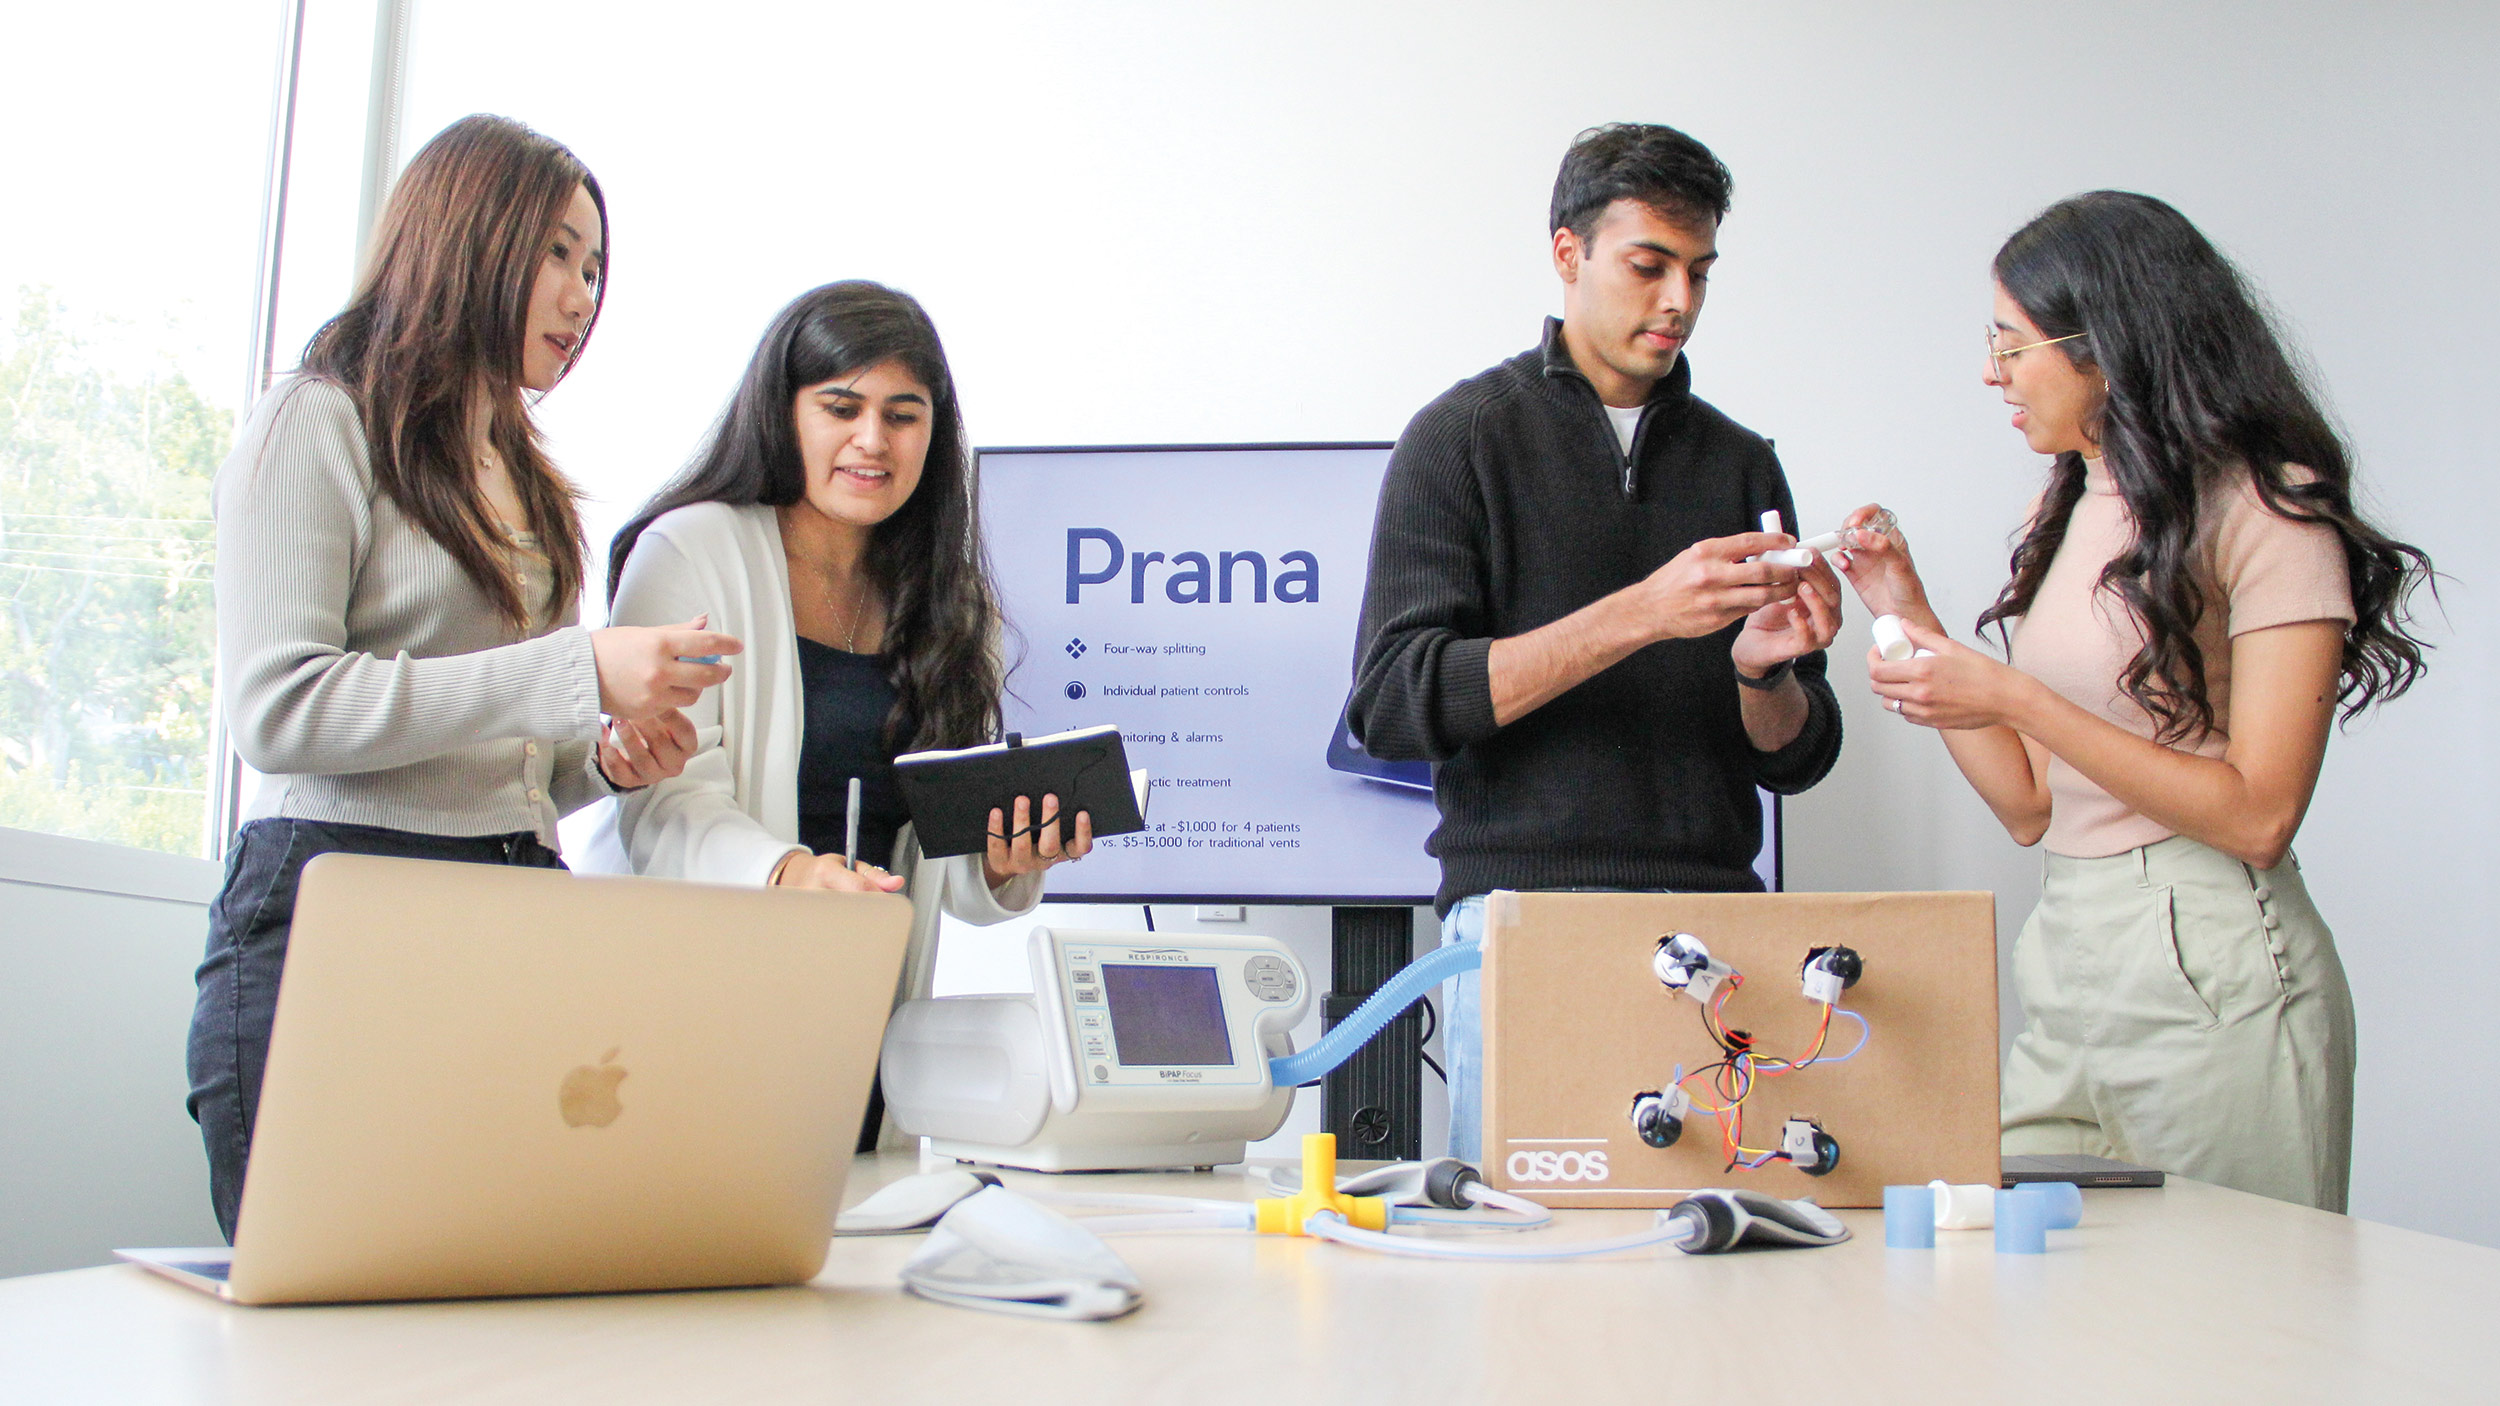 Prana team examing their ventilator device